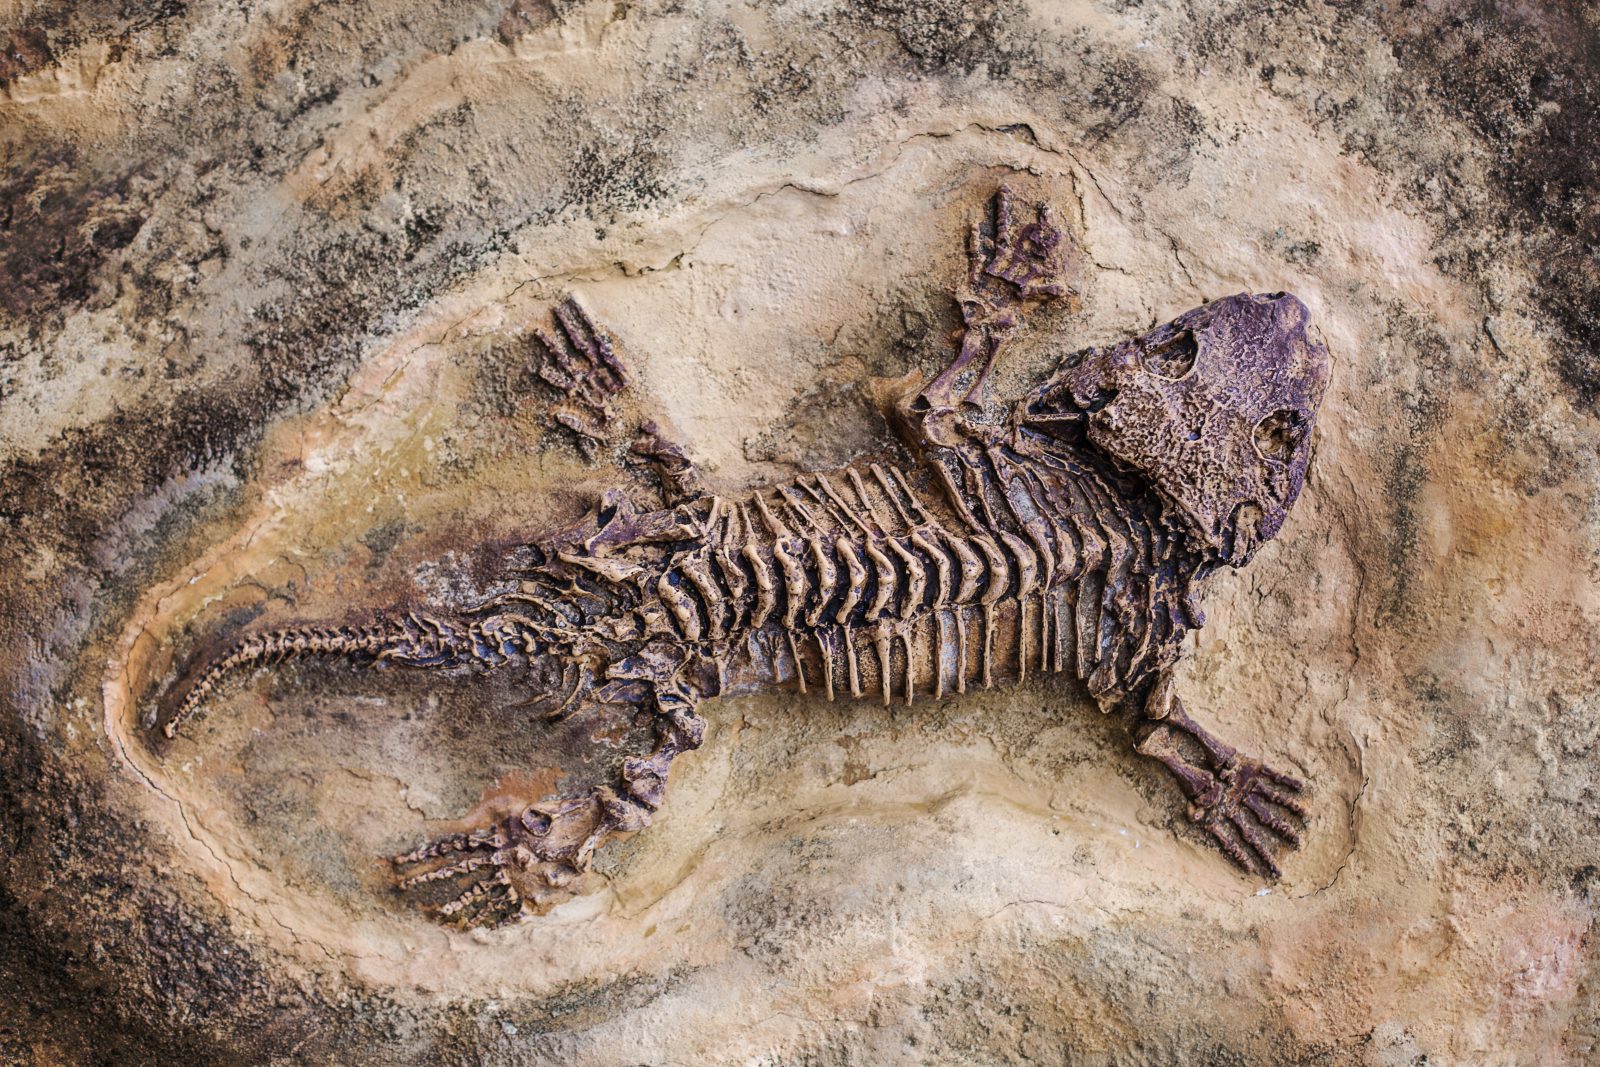 Fossil dinosaur lizard. Fossil of prehistoric lizard skeleton on the rock